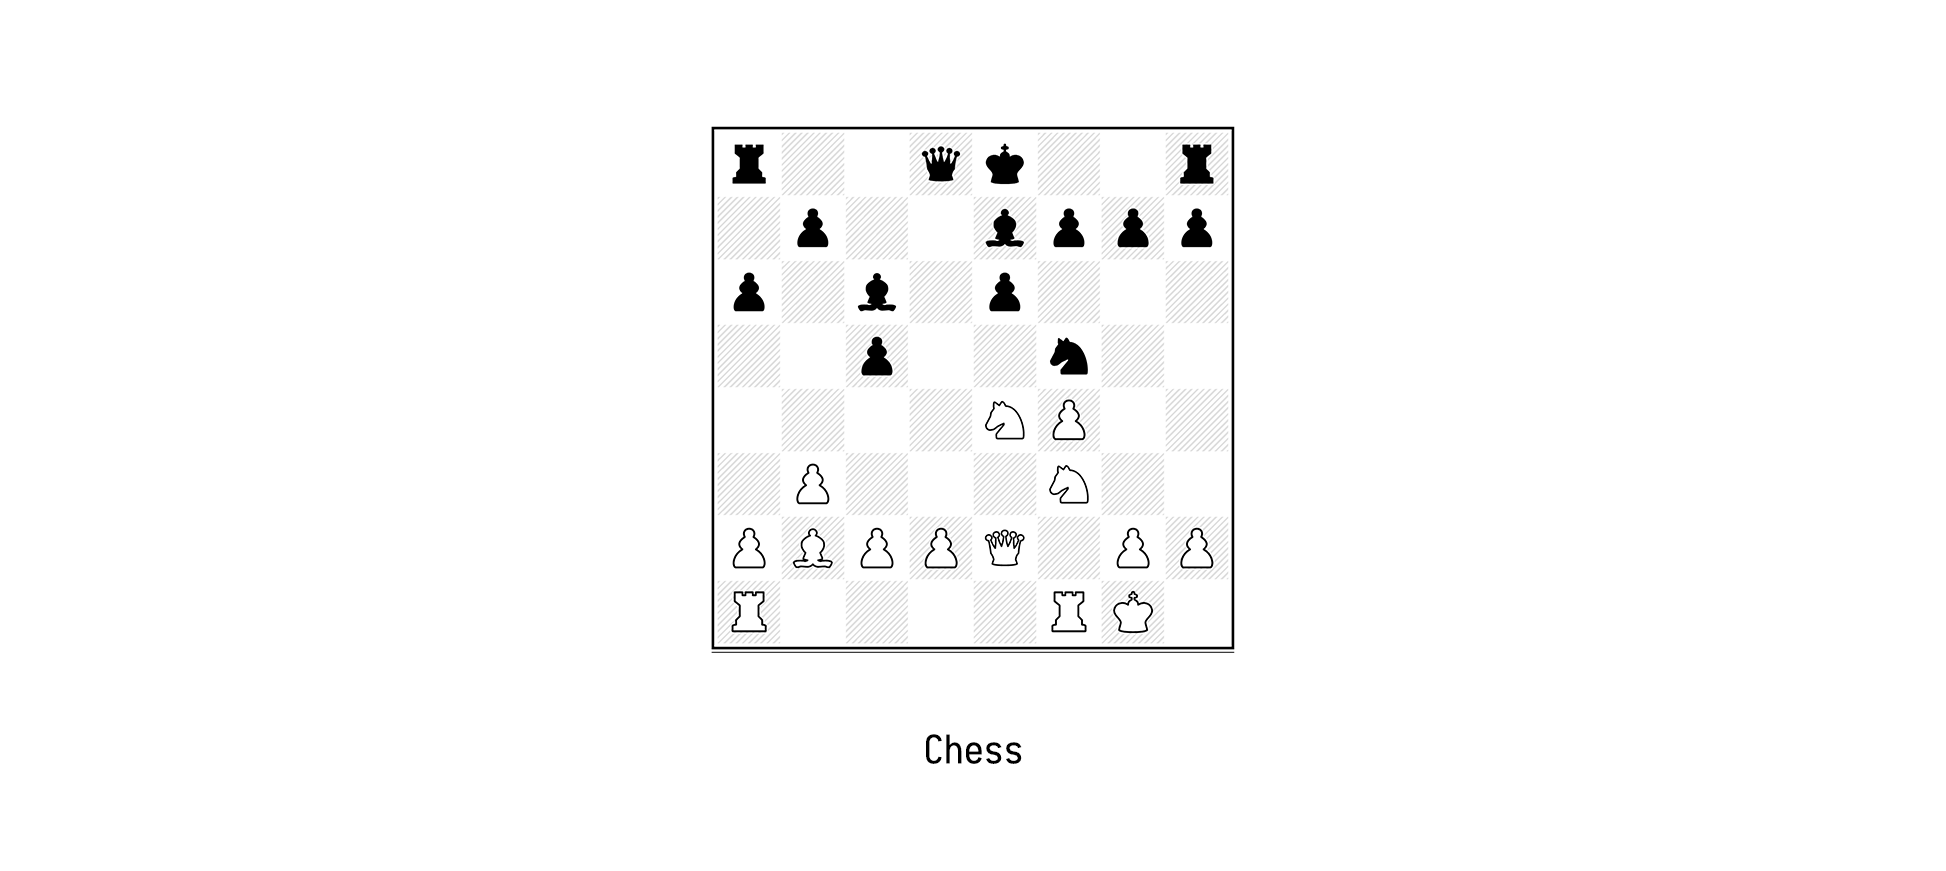 https://raw.githubusercontent.com/sunflowerseastar/chess/master/chess-readme.png